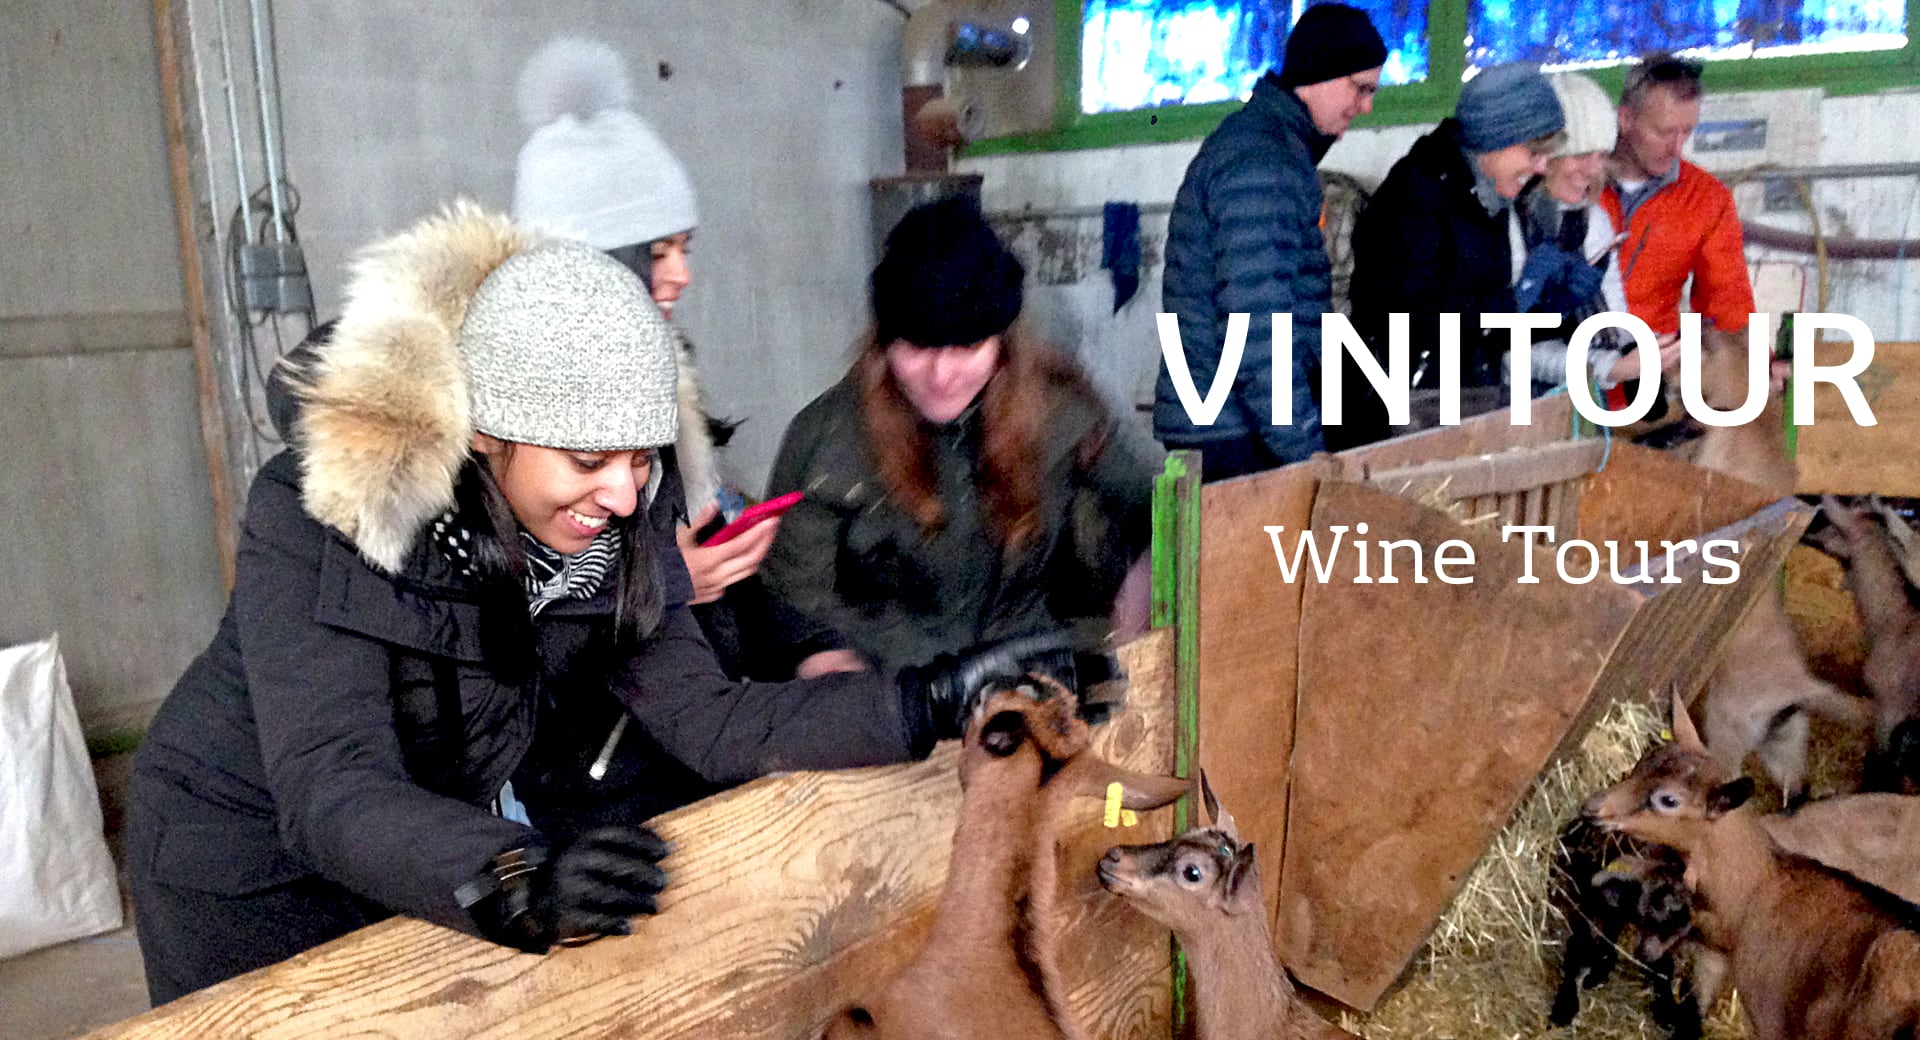 vinitour wine tours at the goats farm